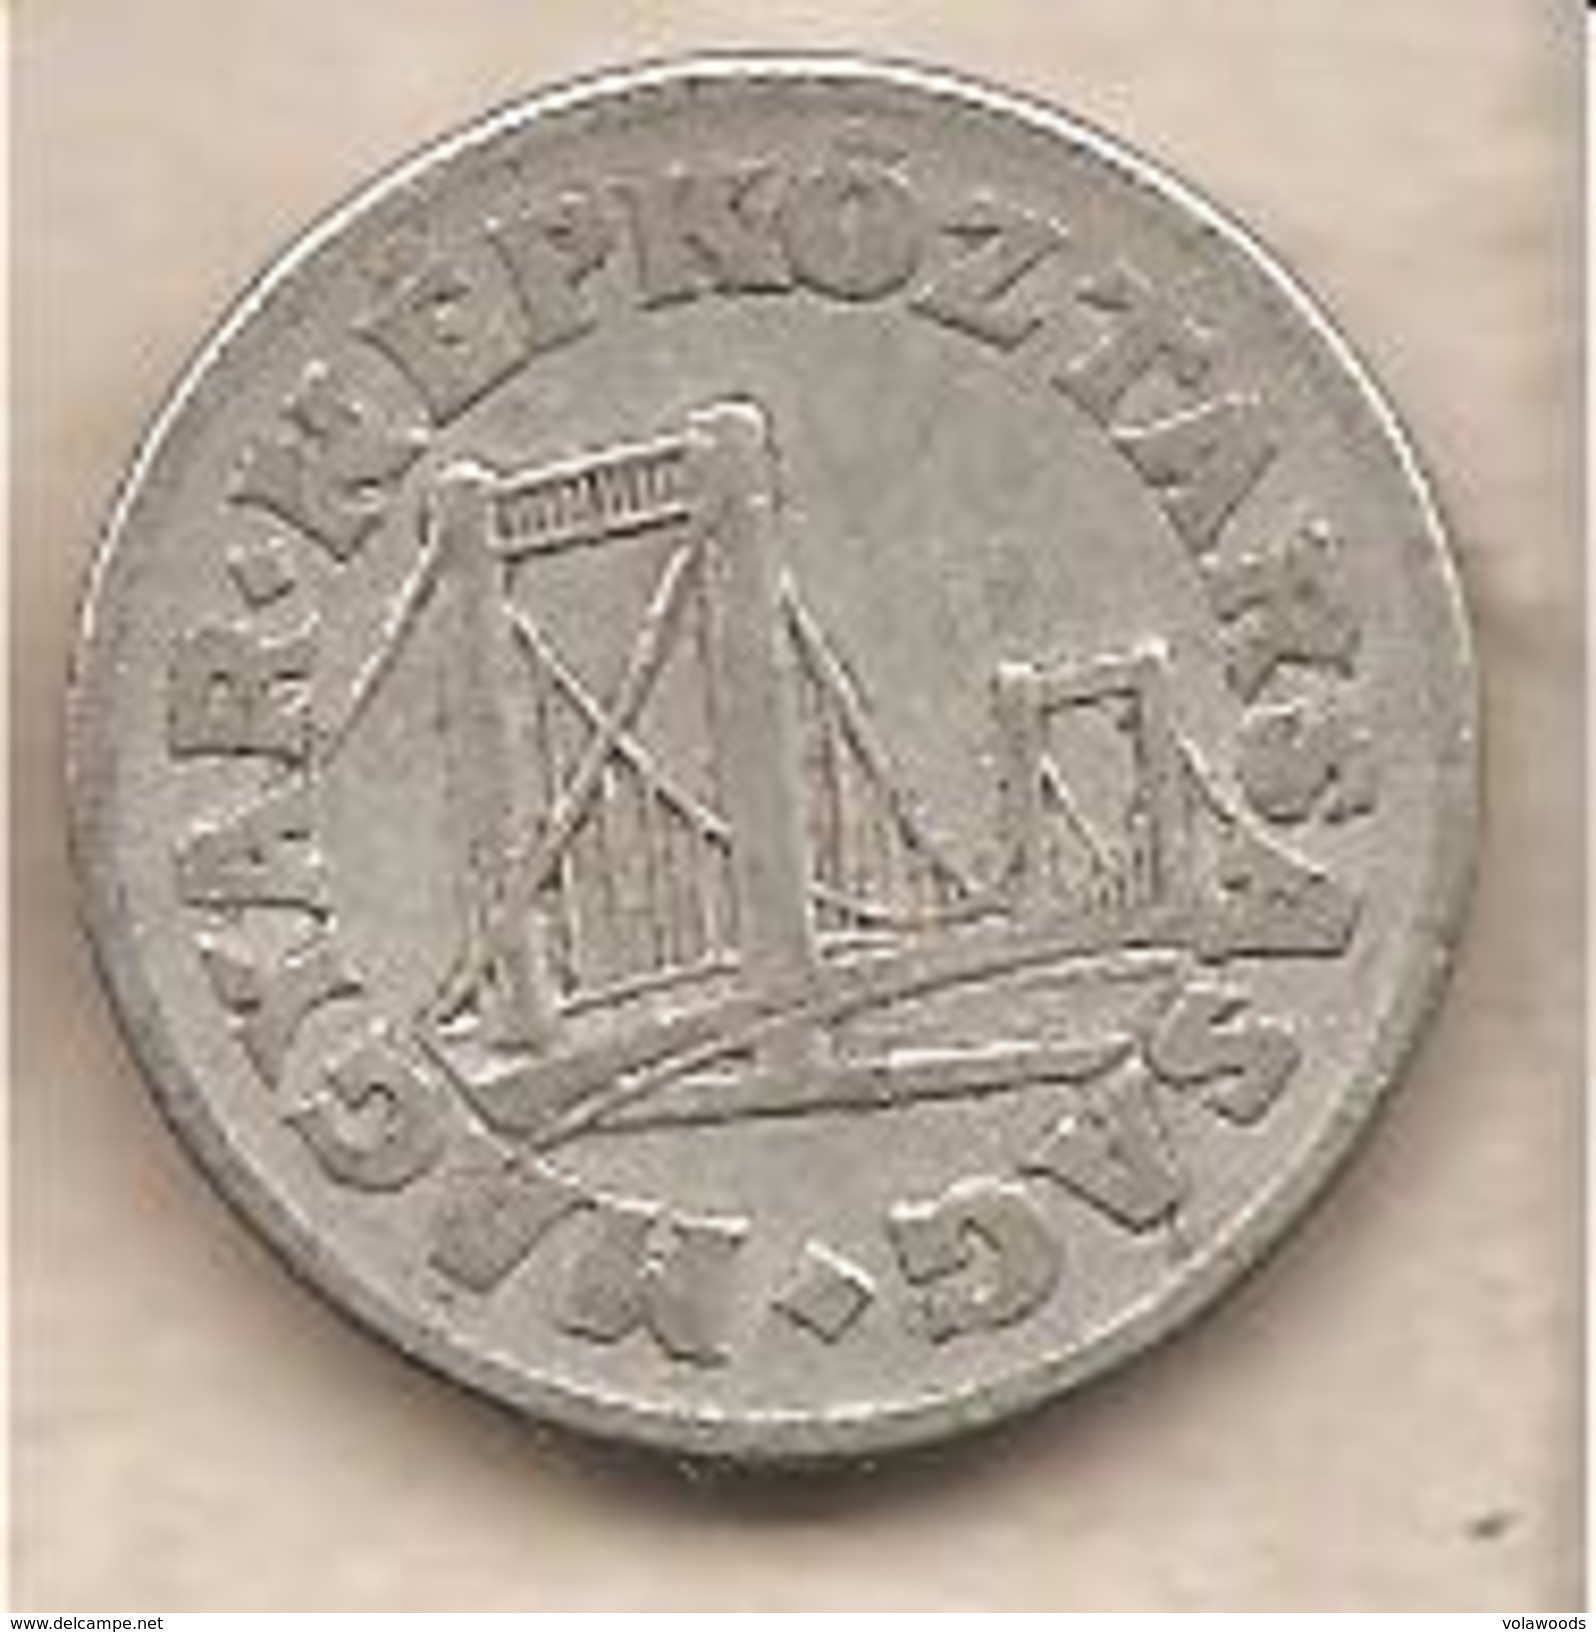 Ungheria - Moneta Circolata Da 50 Filler - 1967 - Ungheria